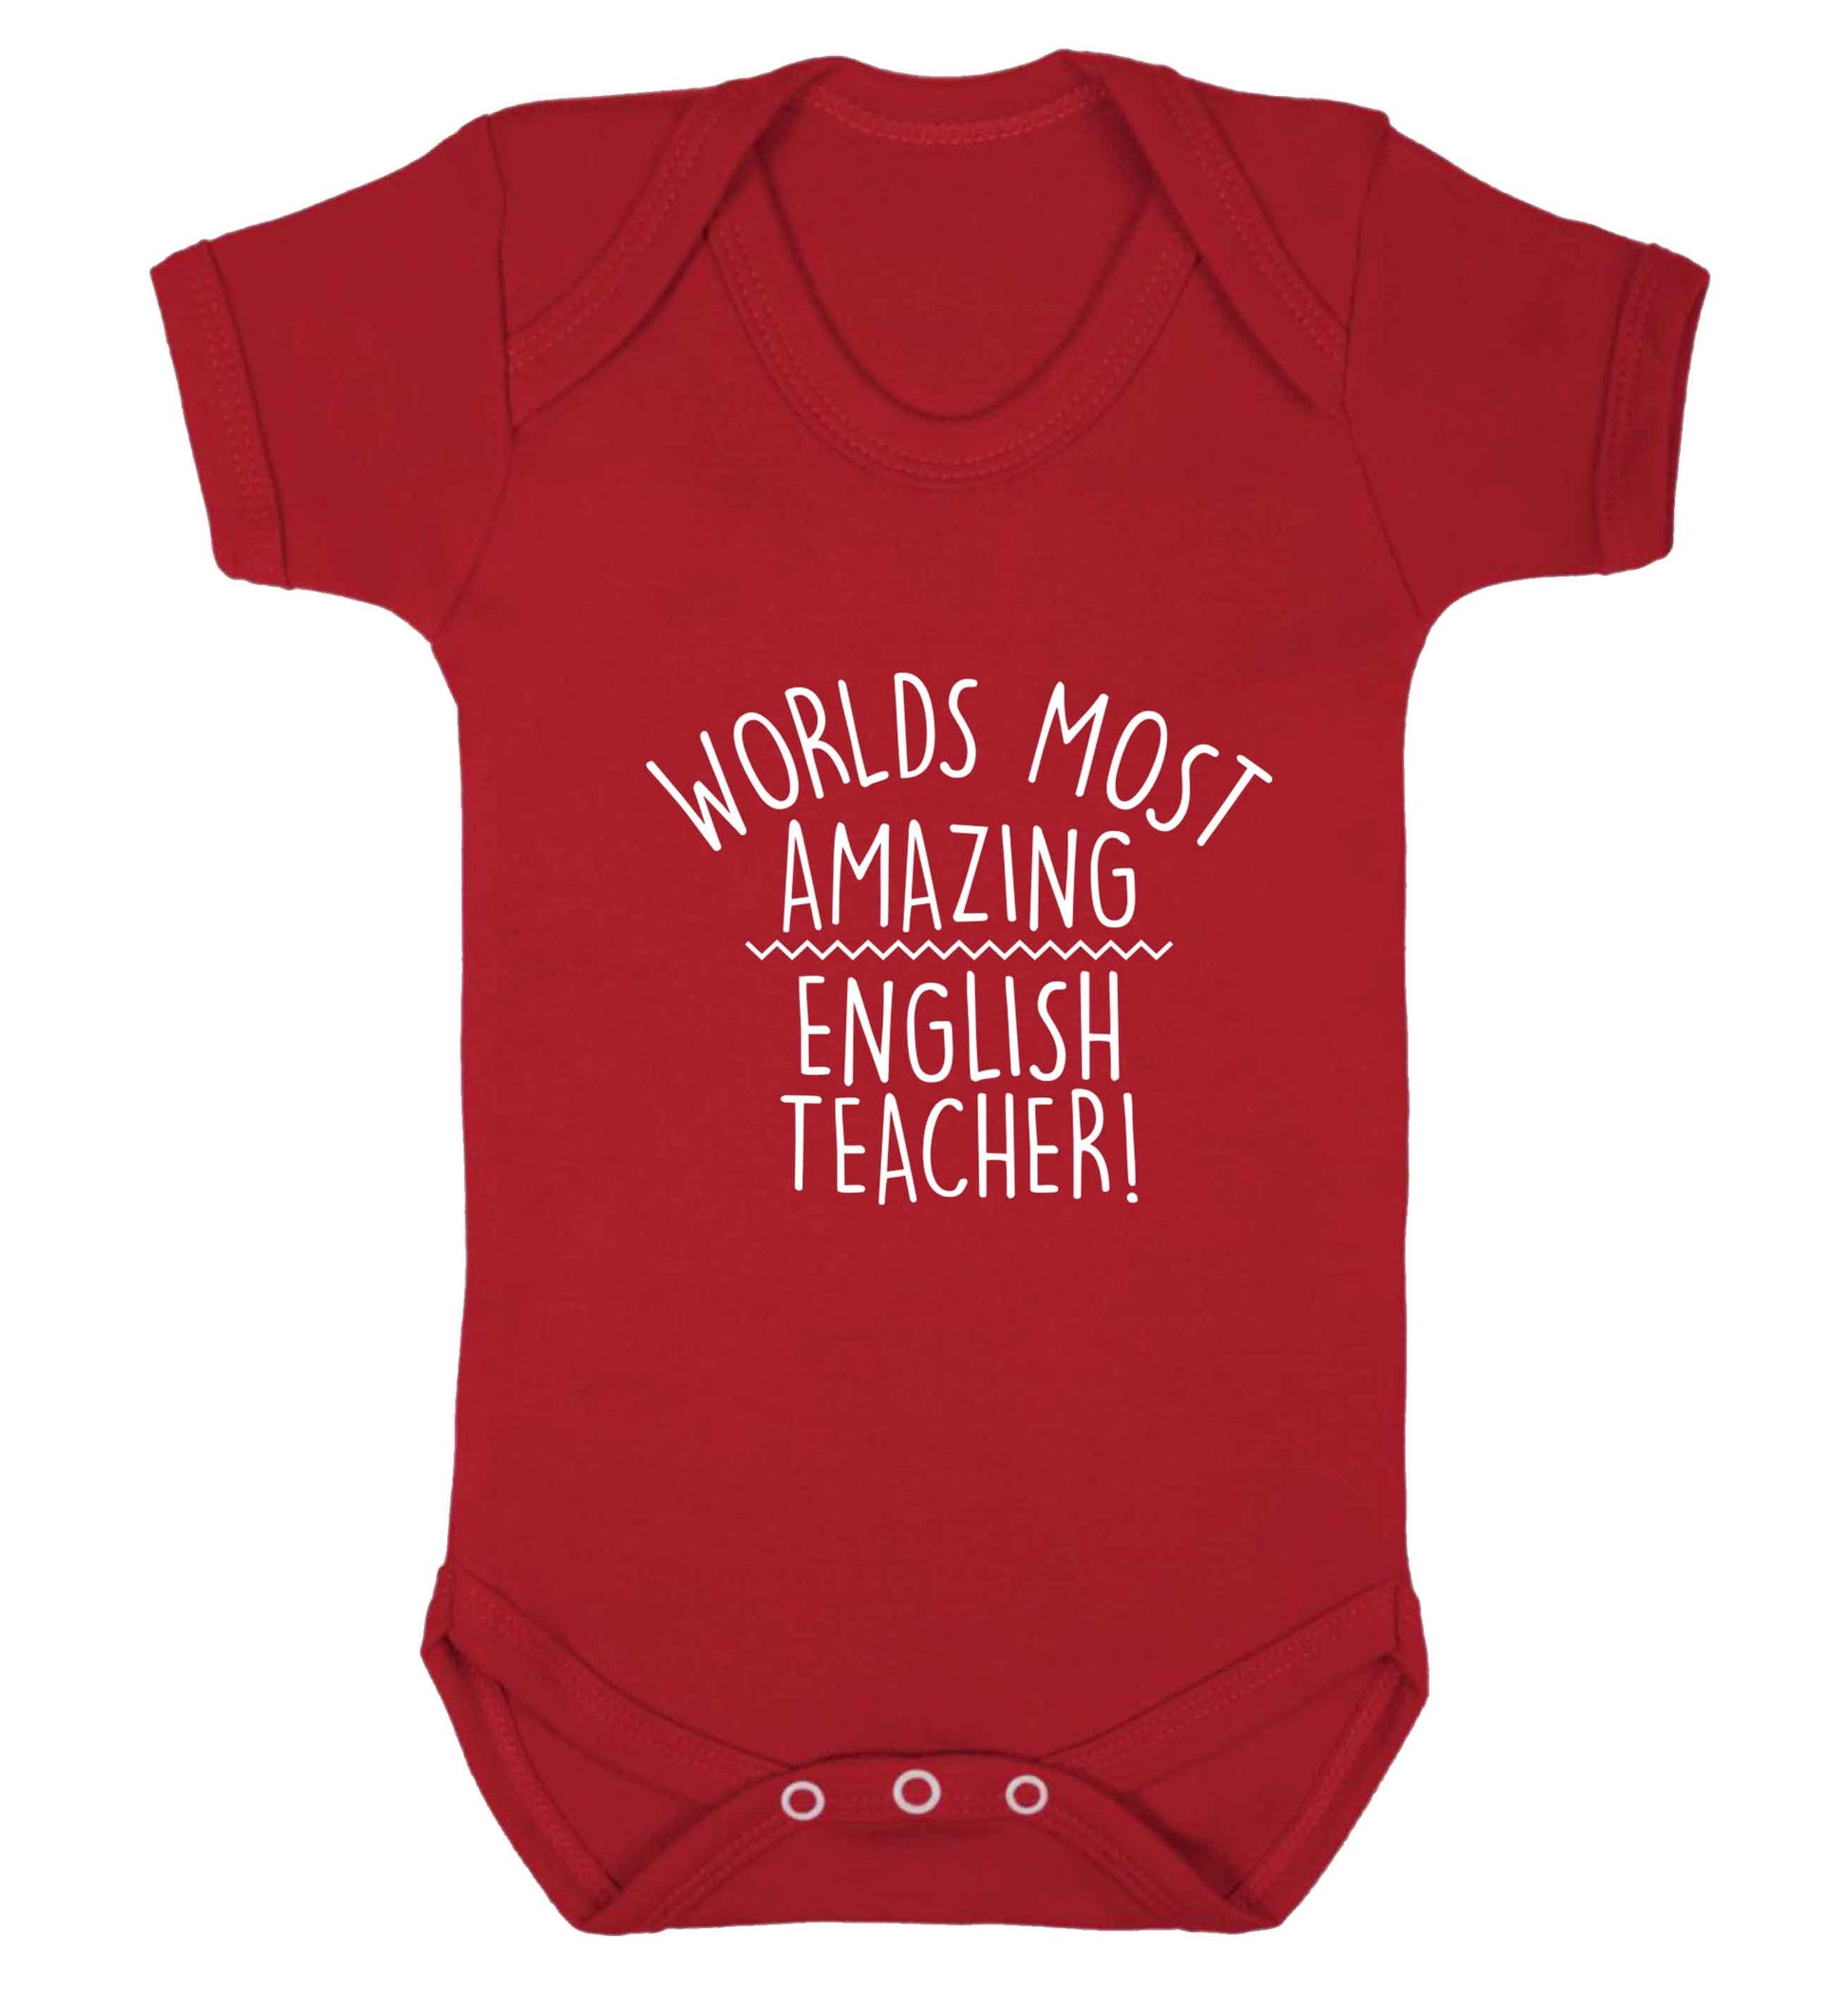 Worlds most amazing English teacher baby vest red 18-24 months